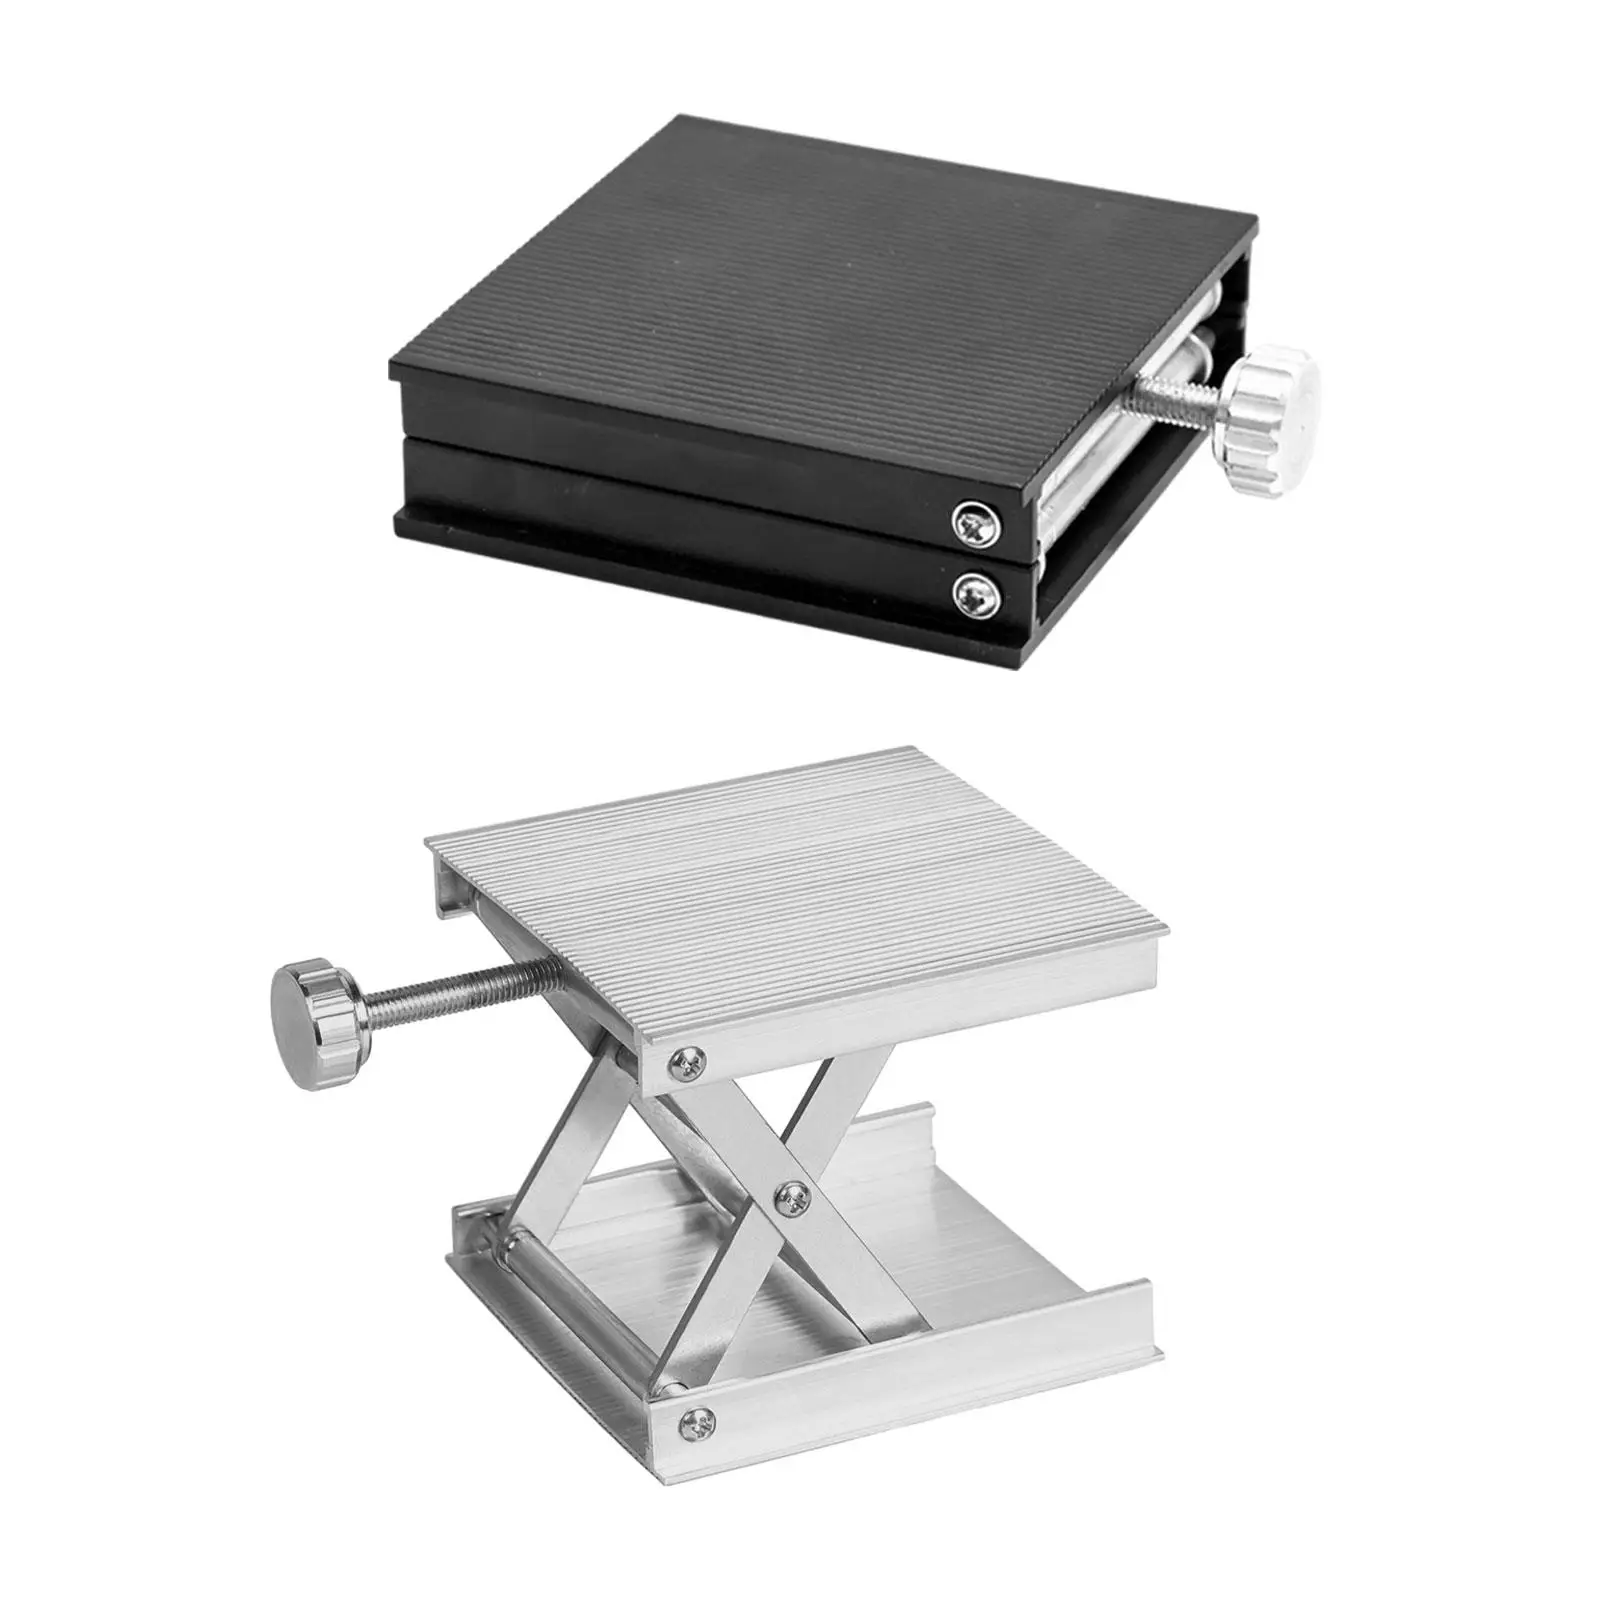 Lifting Platform Lab Lifting Stand Router Lift Table Adjustable Lifting Stand Lab Platform Stand